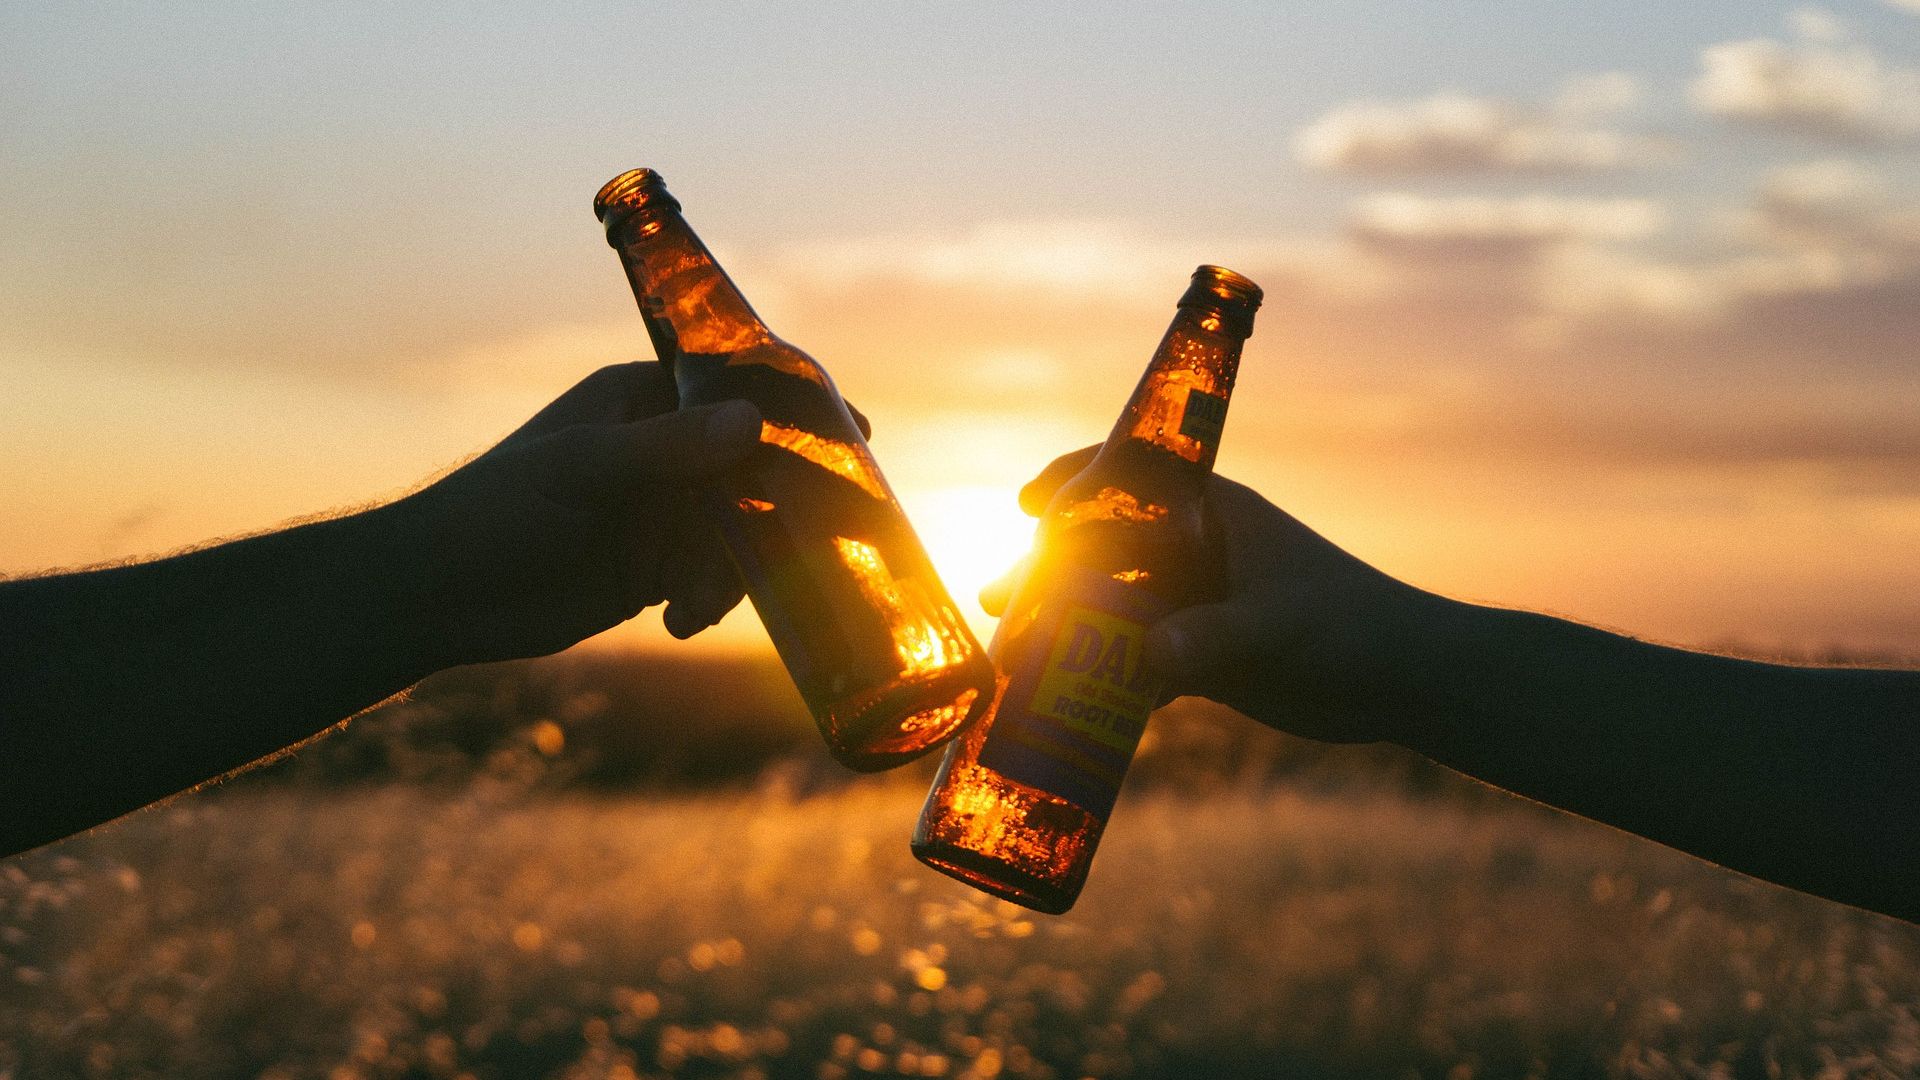 Wallpaper Beer bottles in hands, sunset, party, celebrations